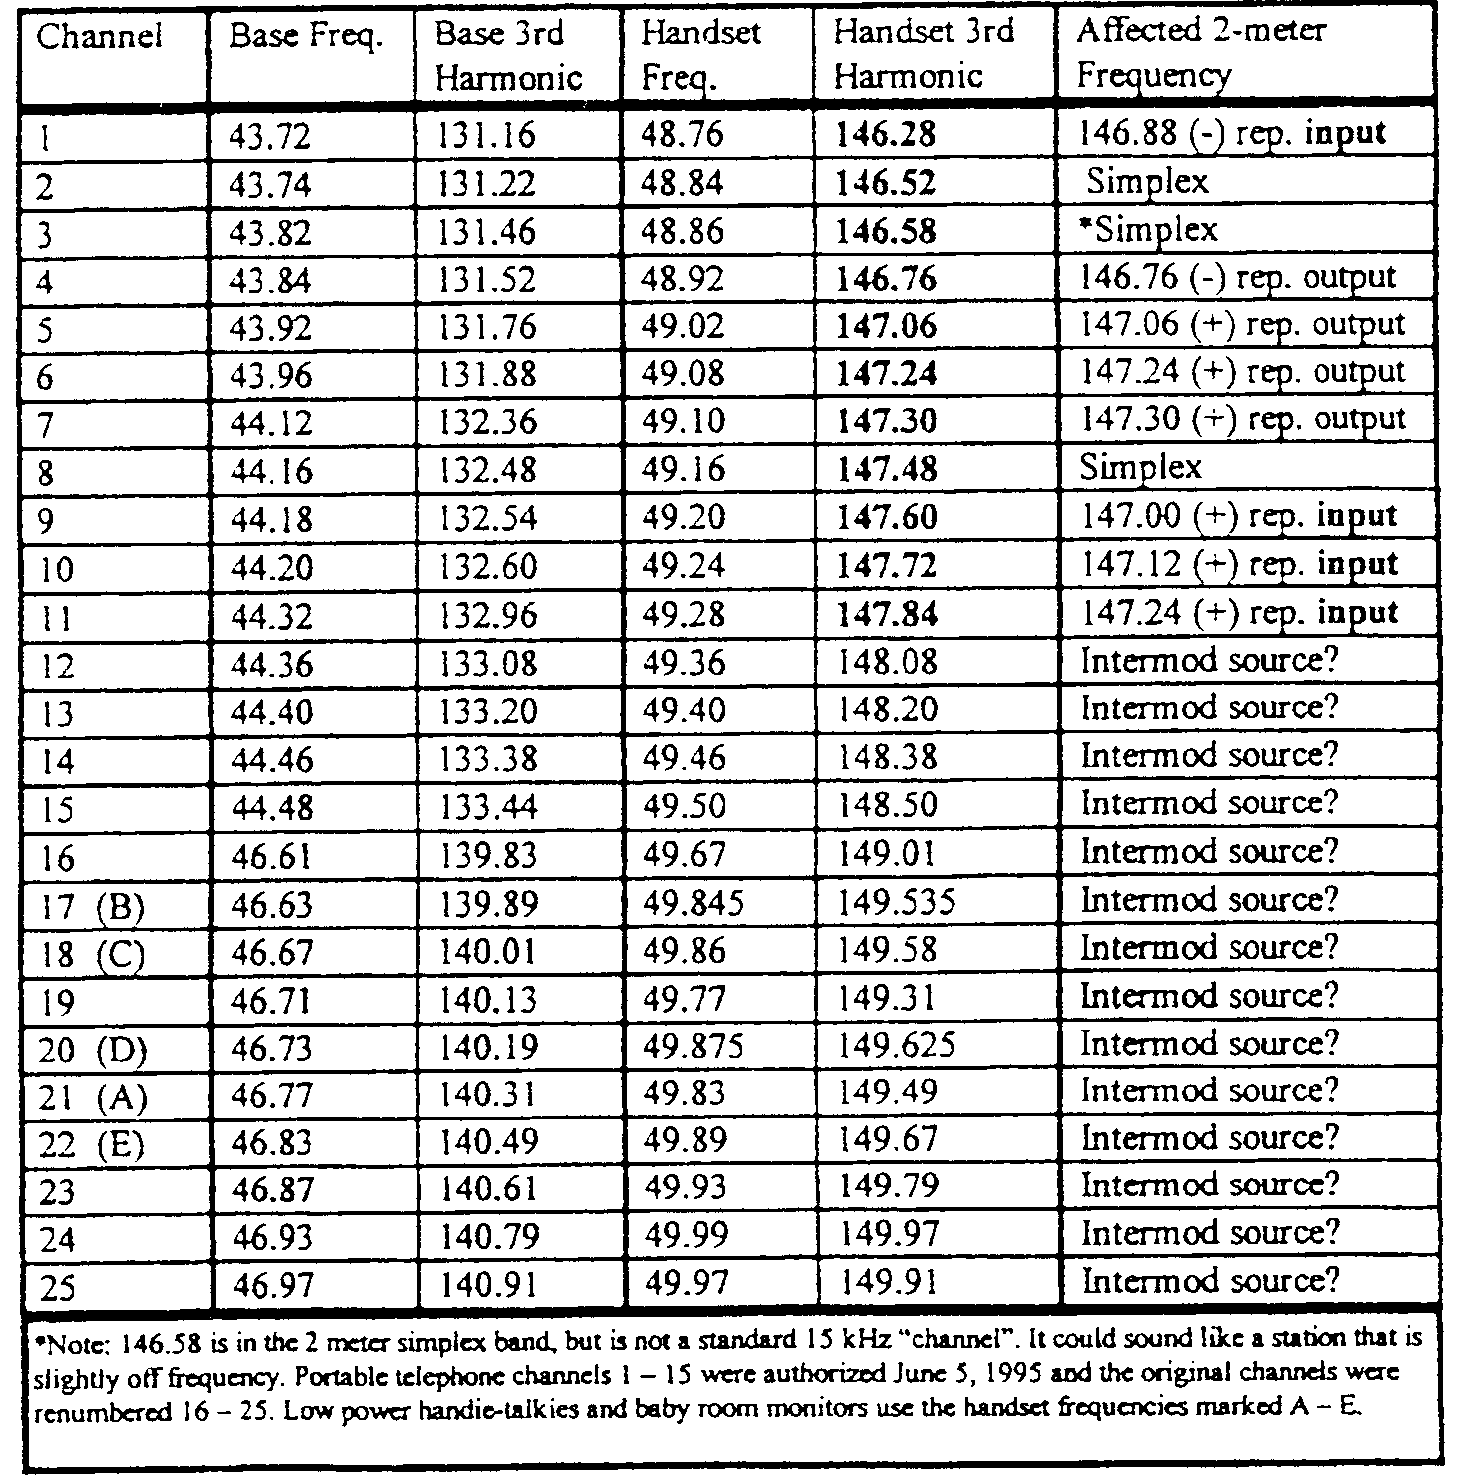 Marine Vhf Frequency Chart